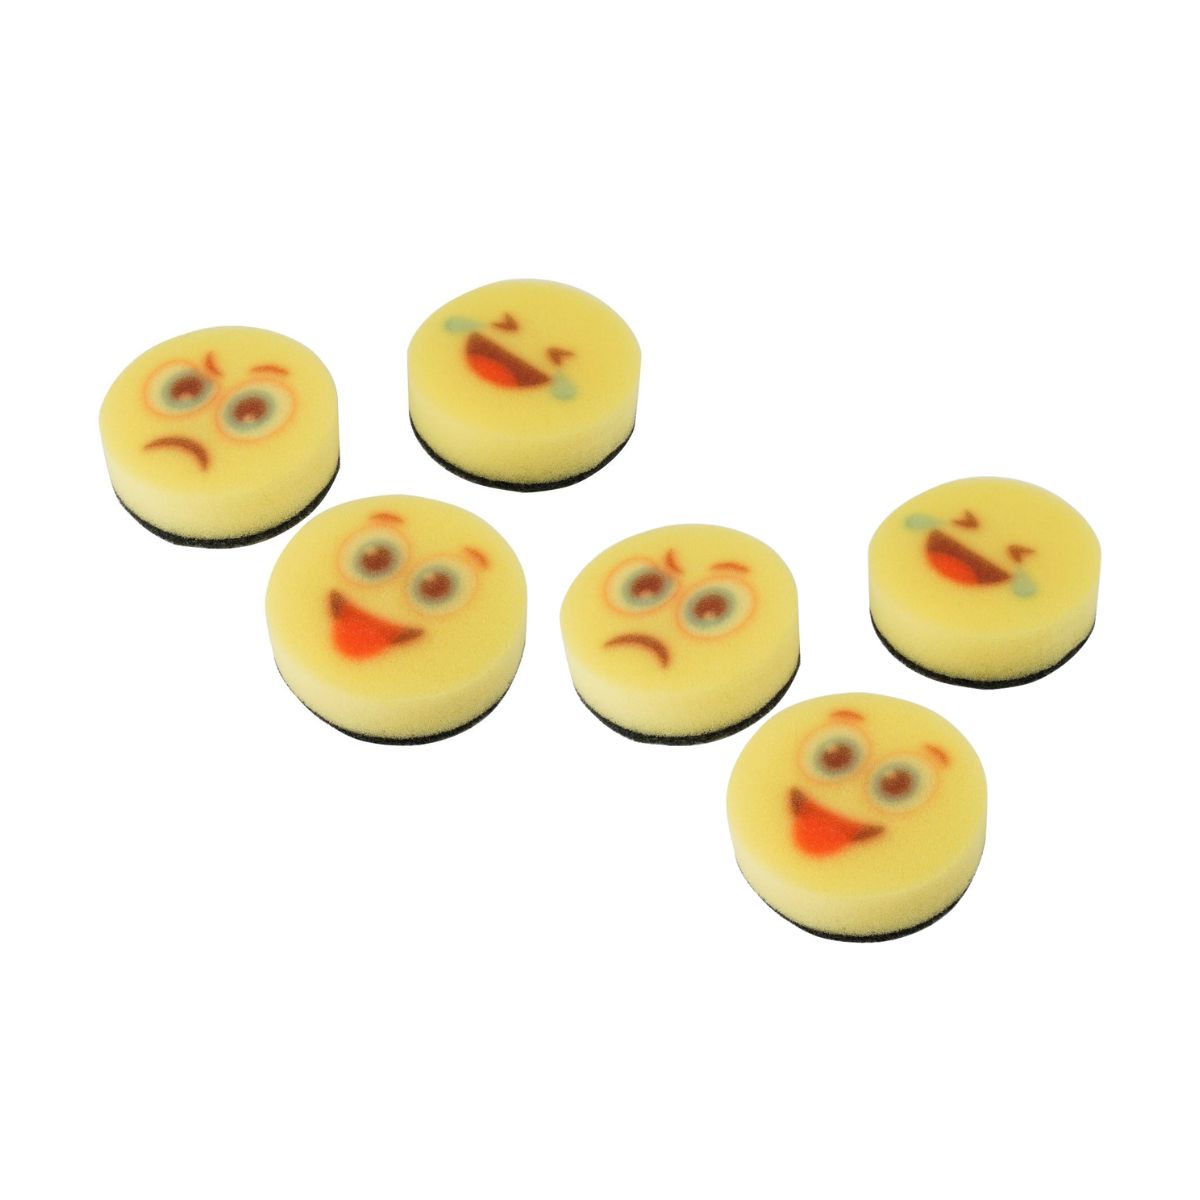 Eponges Emoji 😀 Collection - Émoticônes en forme de fruits